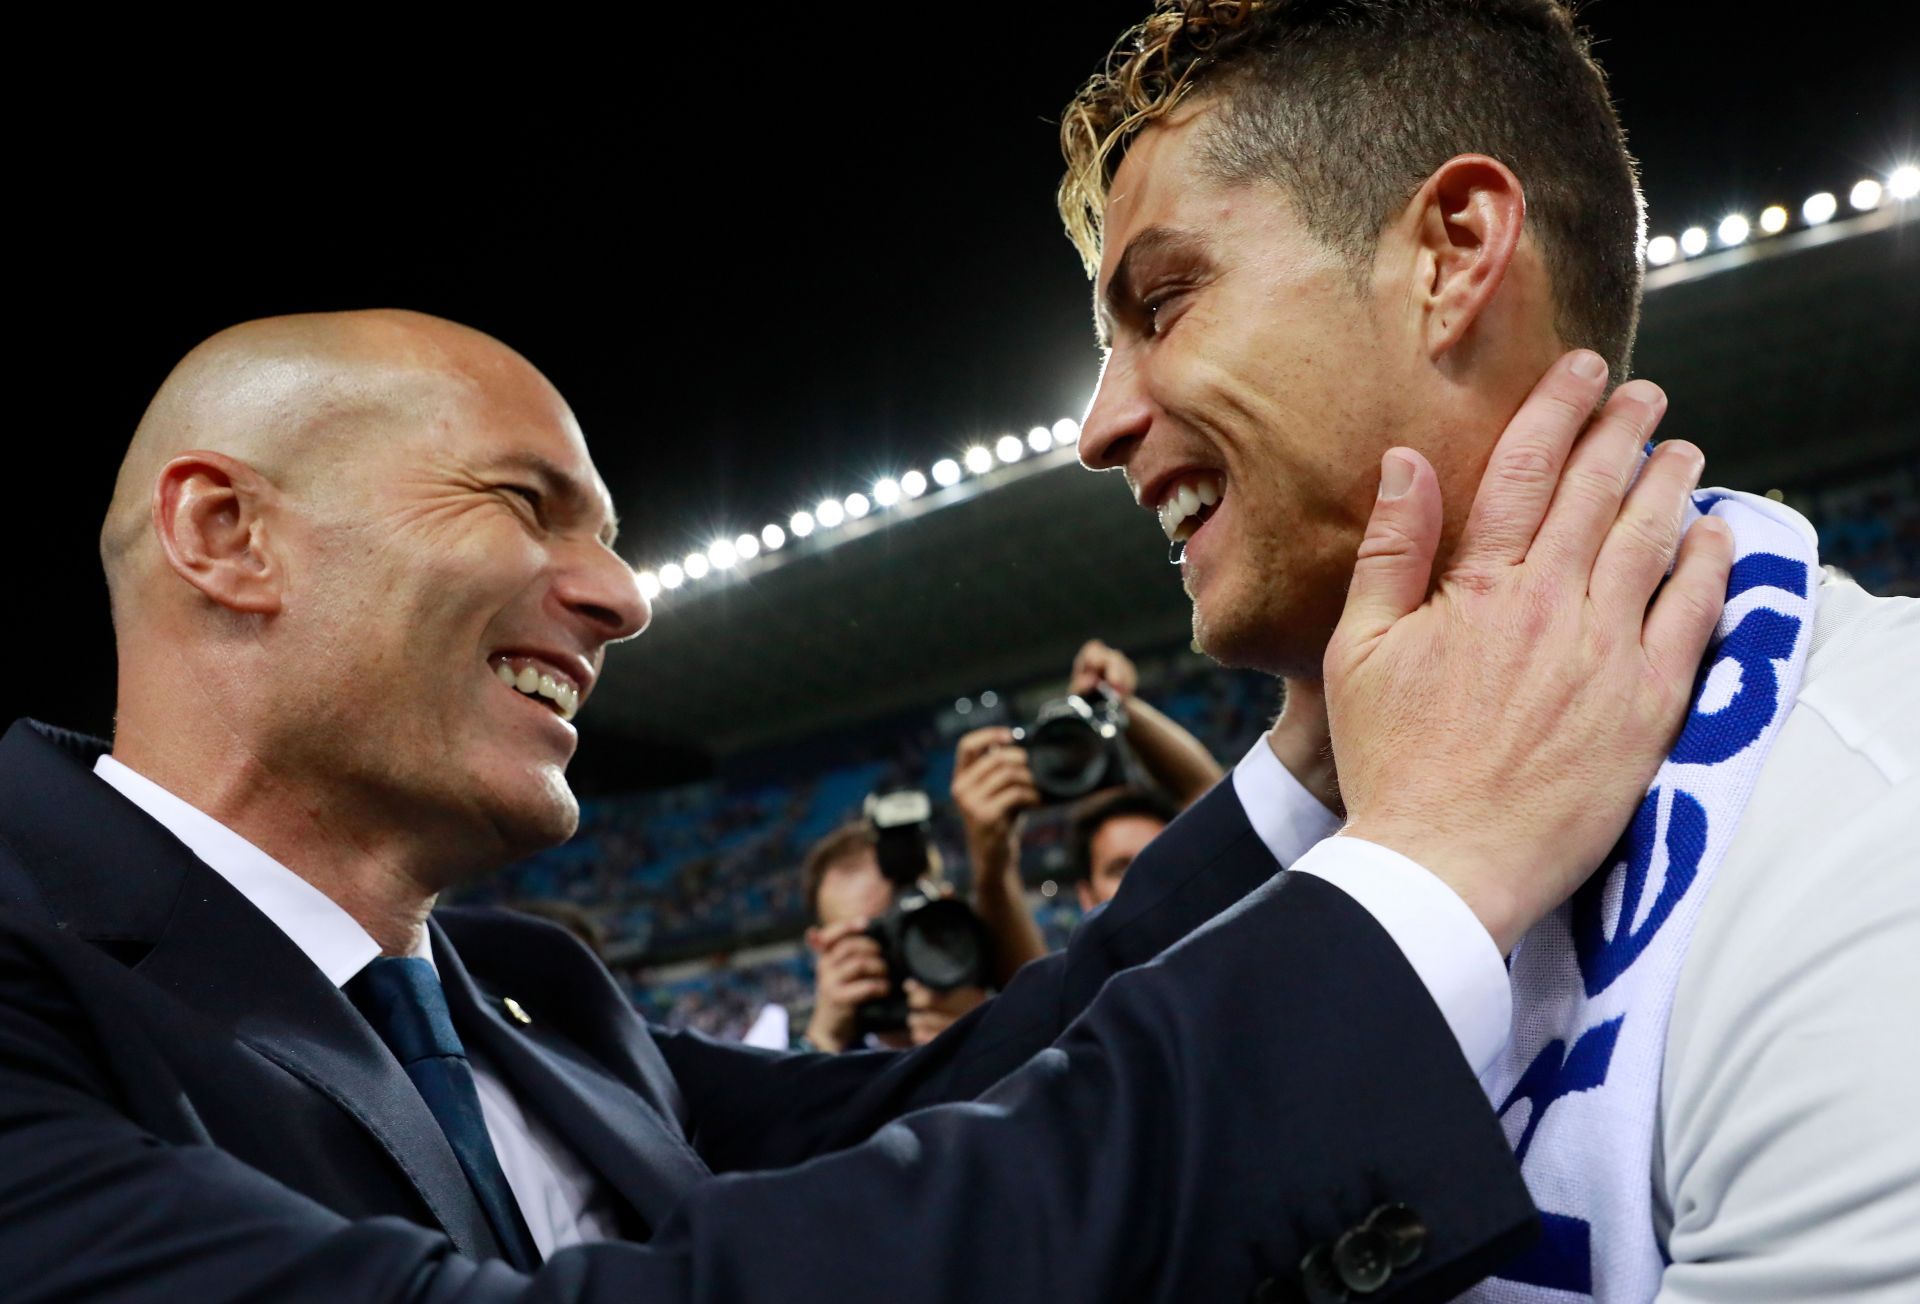 Zinedine Zidane has worked with huge talents, including Cristiano Ronaldo